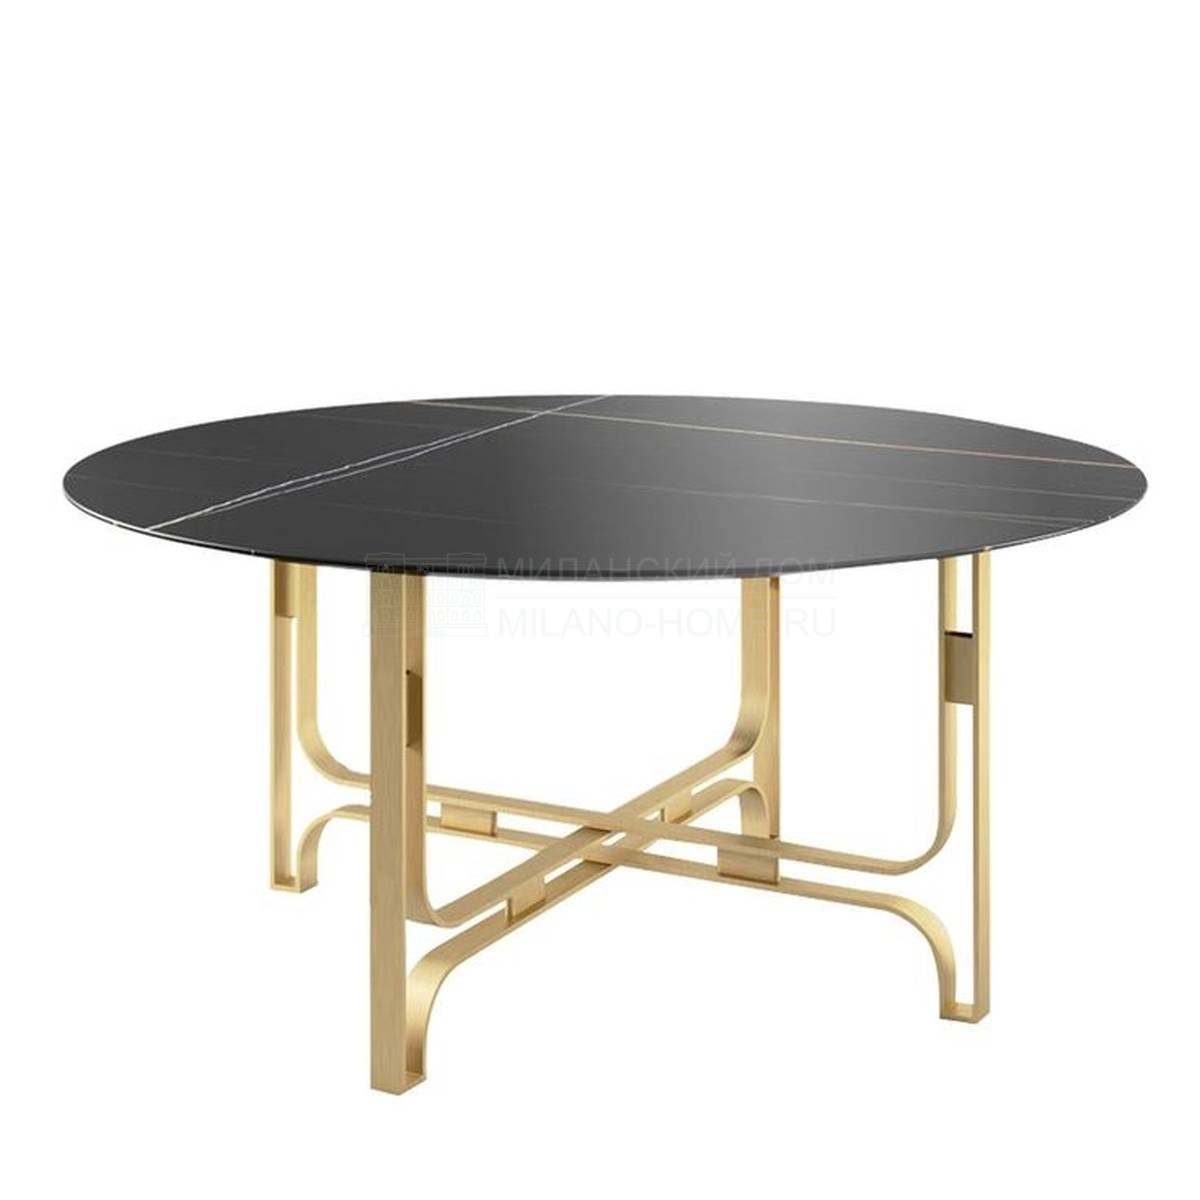 Кофейный столик Gregory round coffee table из Италии фабрики MARIONI